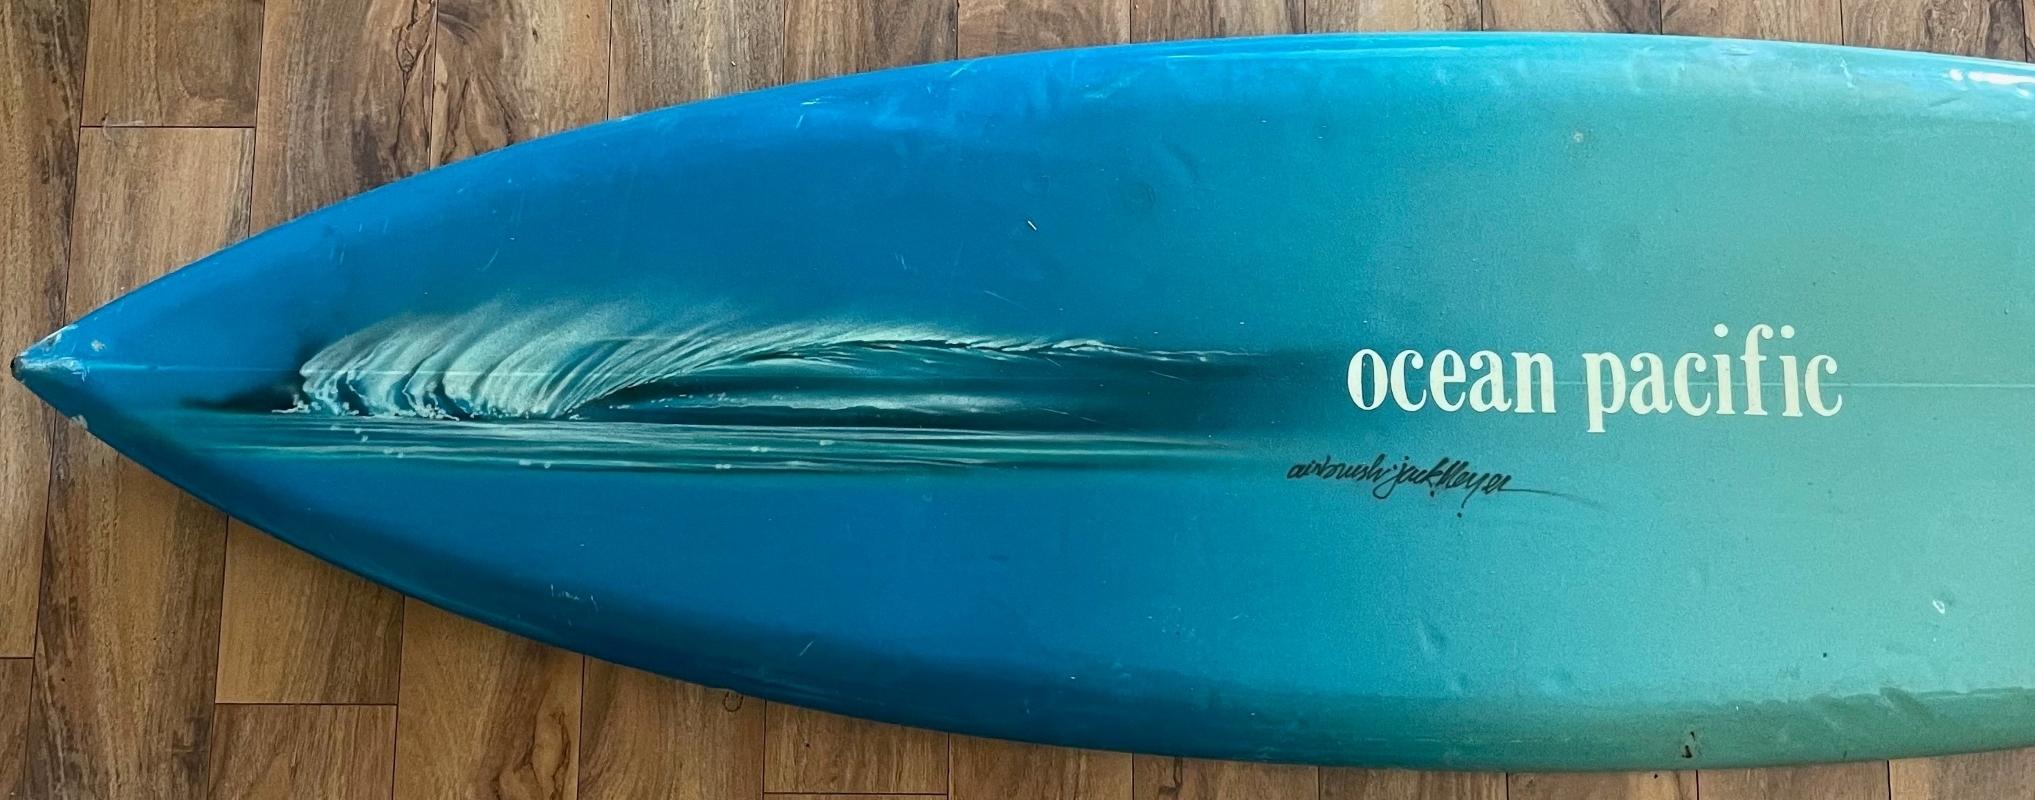 ocean pacific surfboard